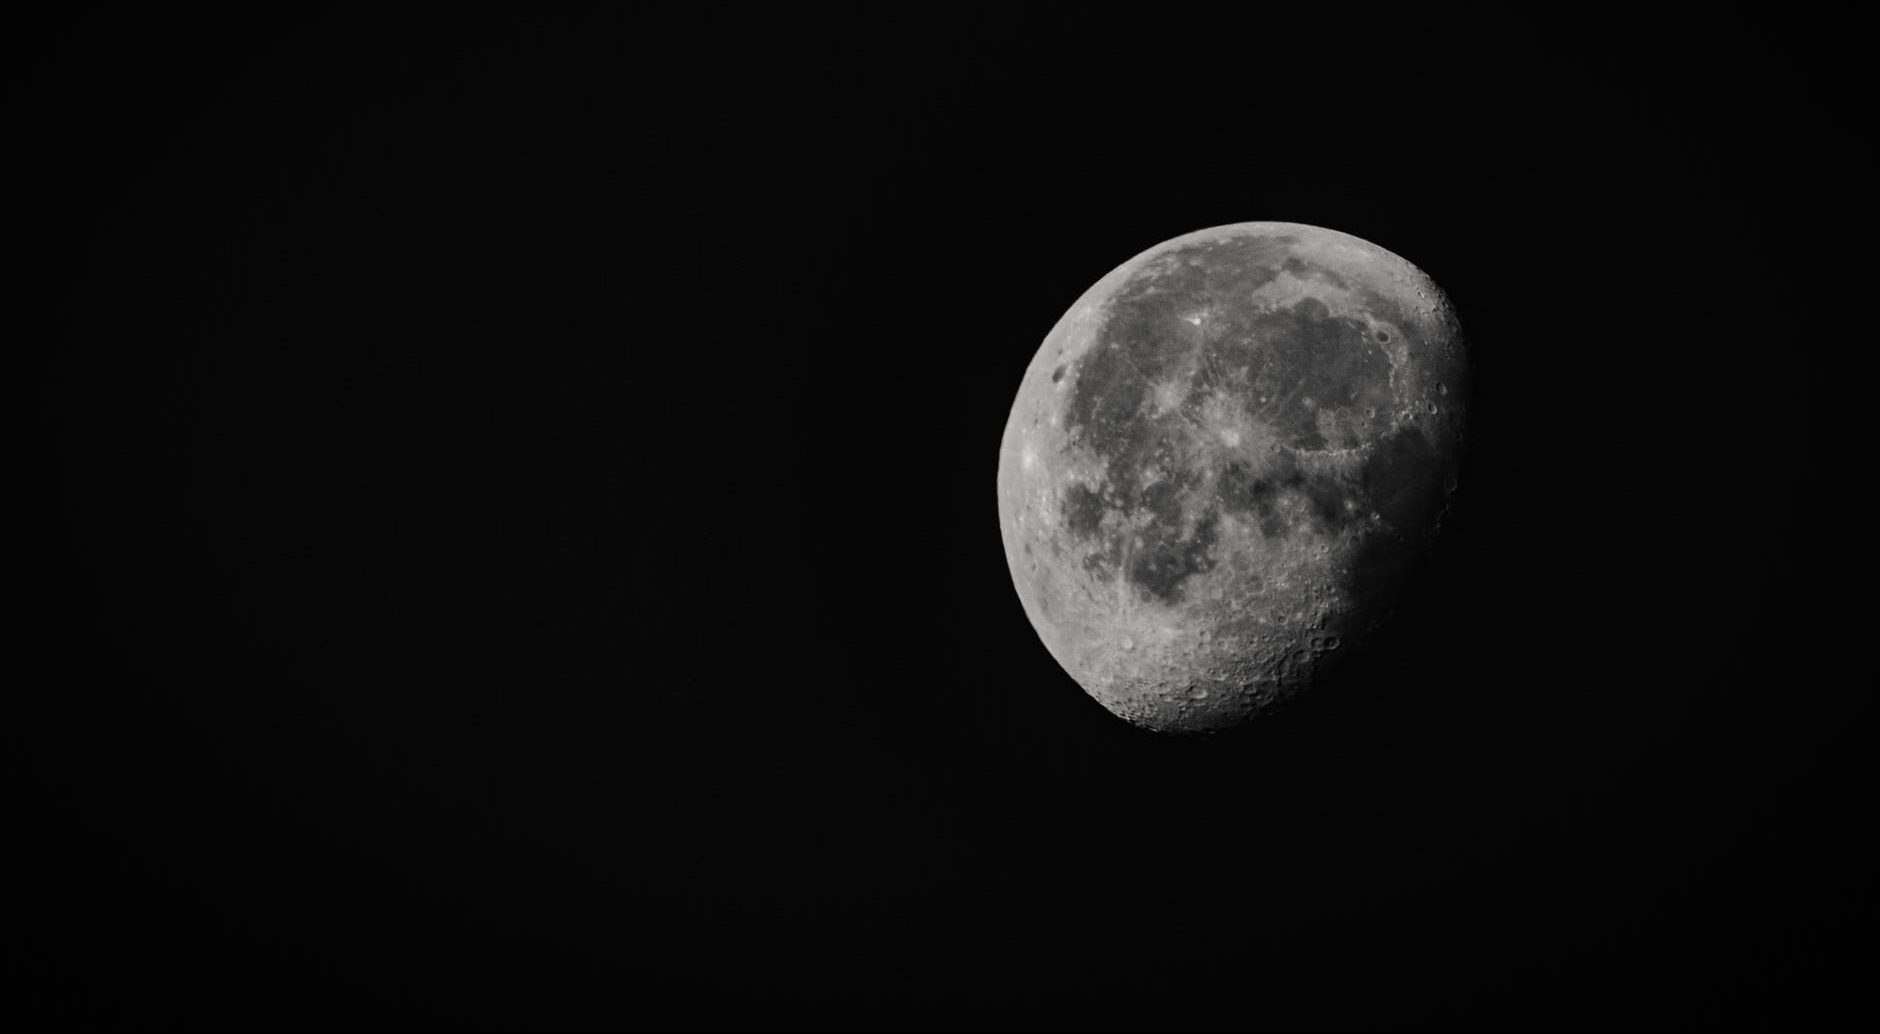 grayscale photo of moon